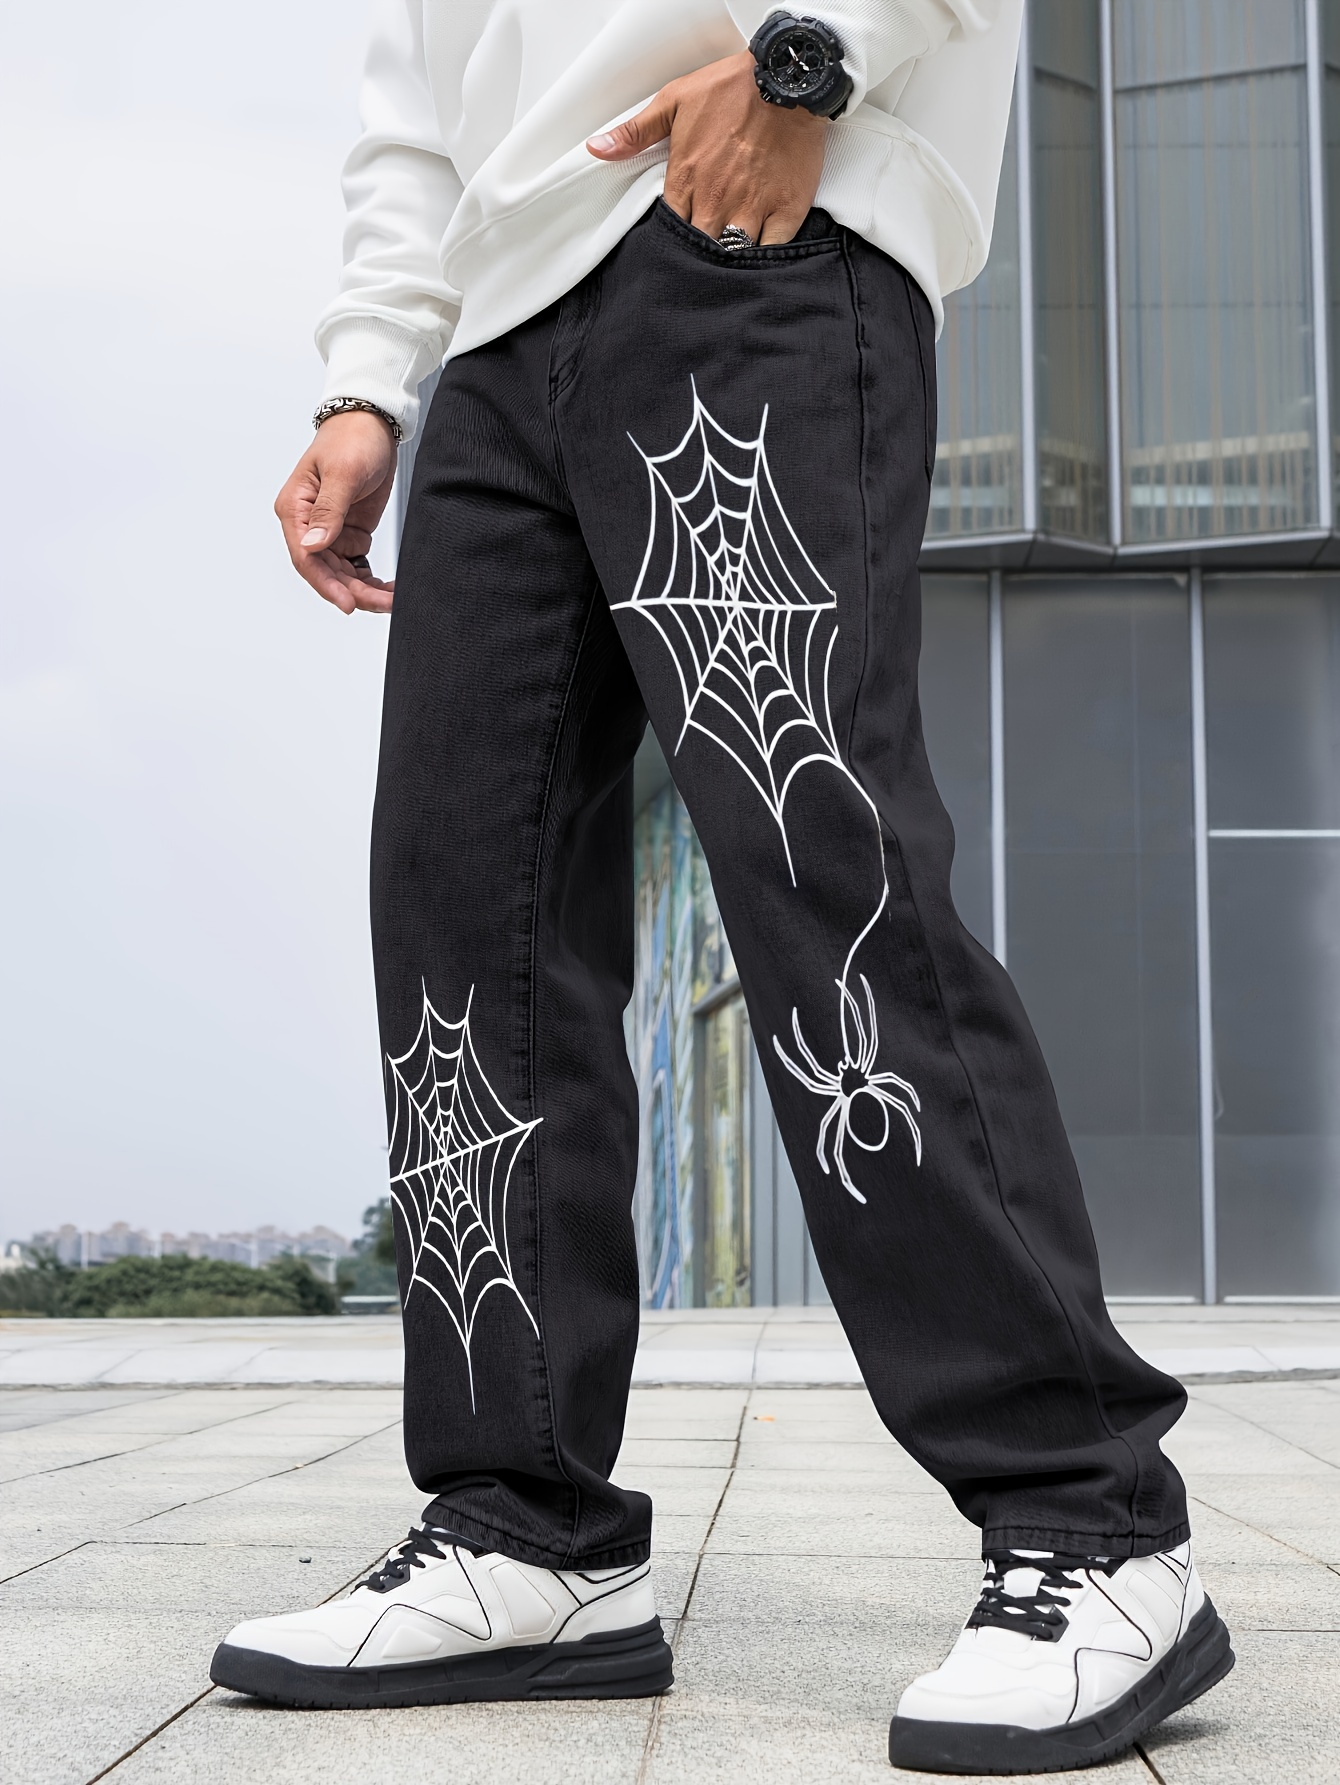 Spider Spider Web Print Kpop Straight Leg Jeans Men's Casual